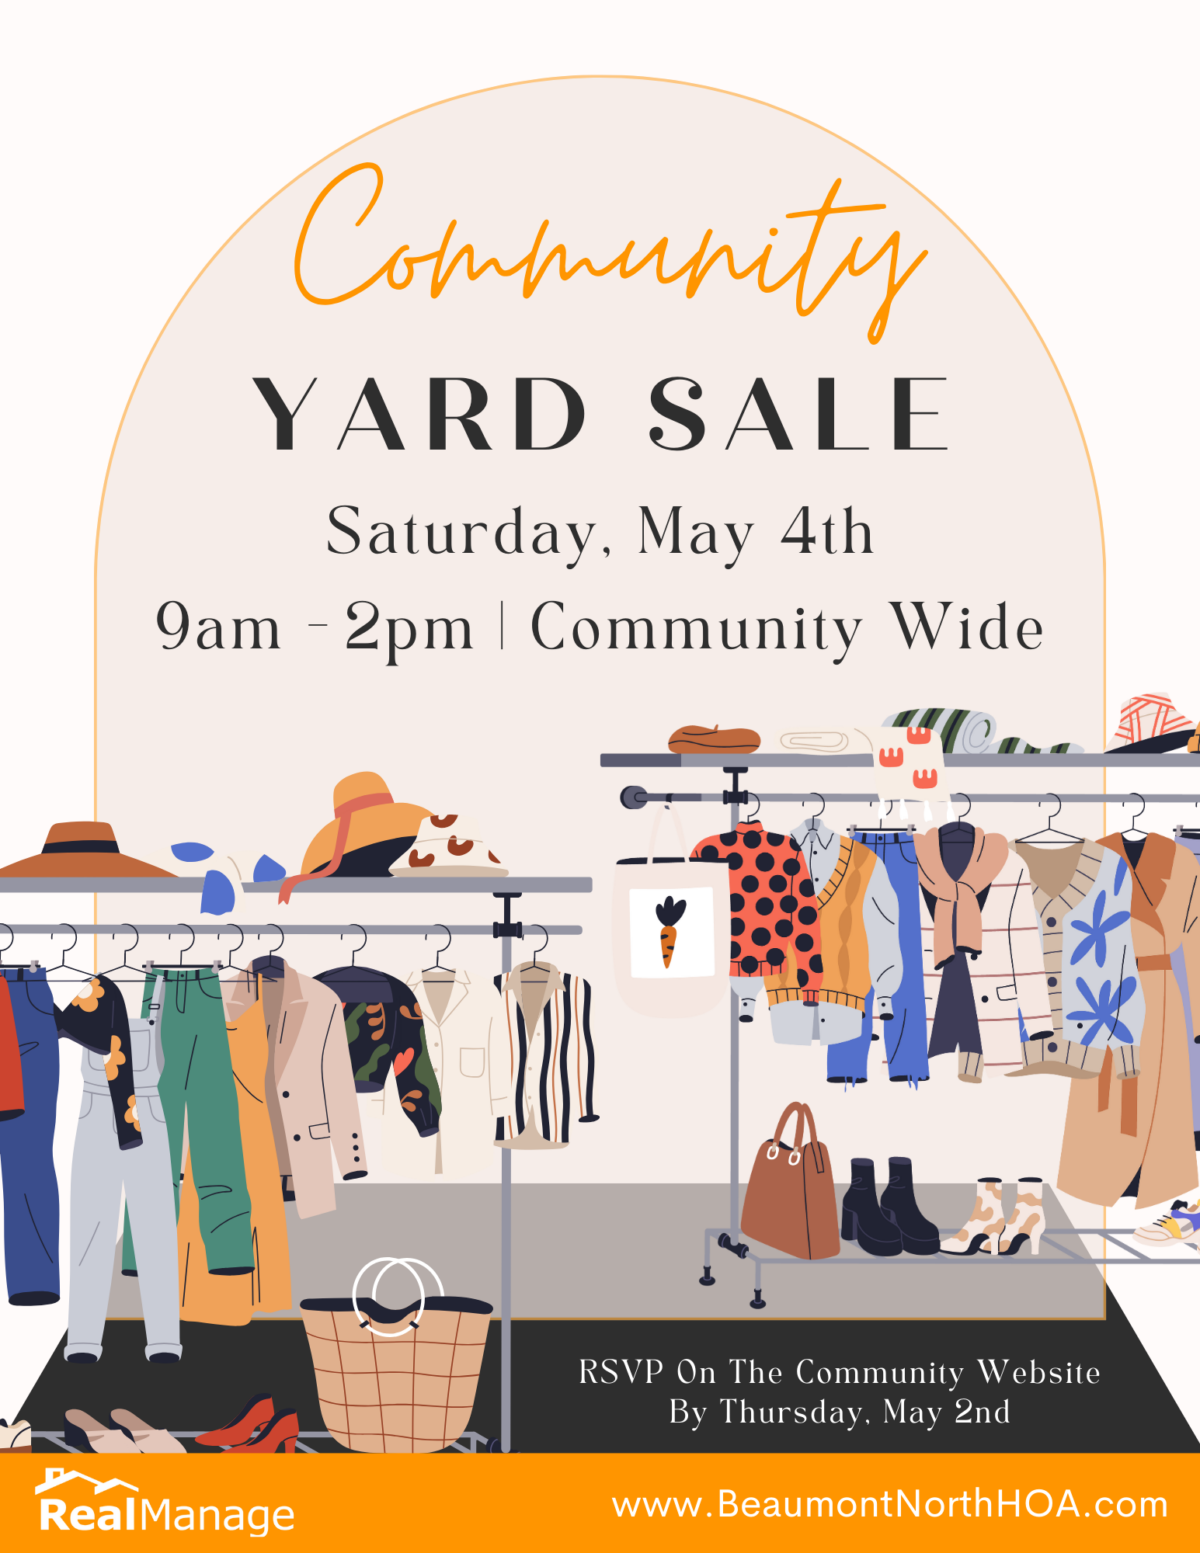 Beaumont - Community Yard Sale